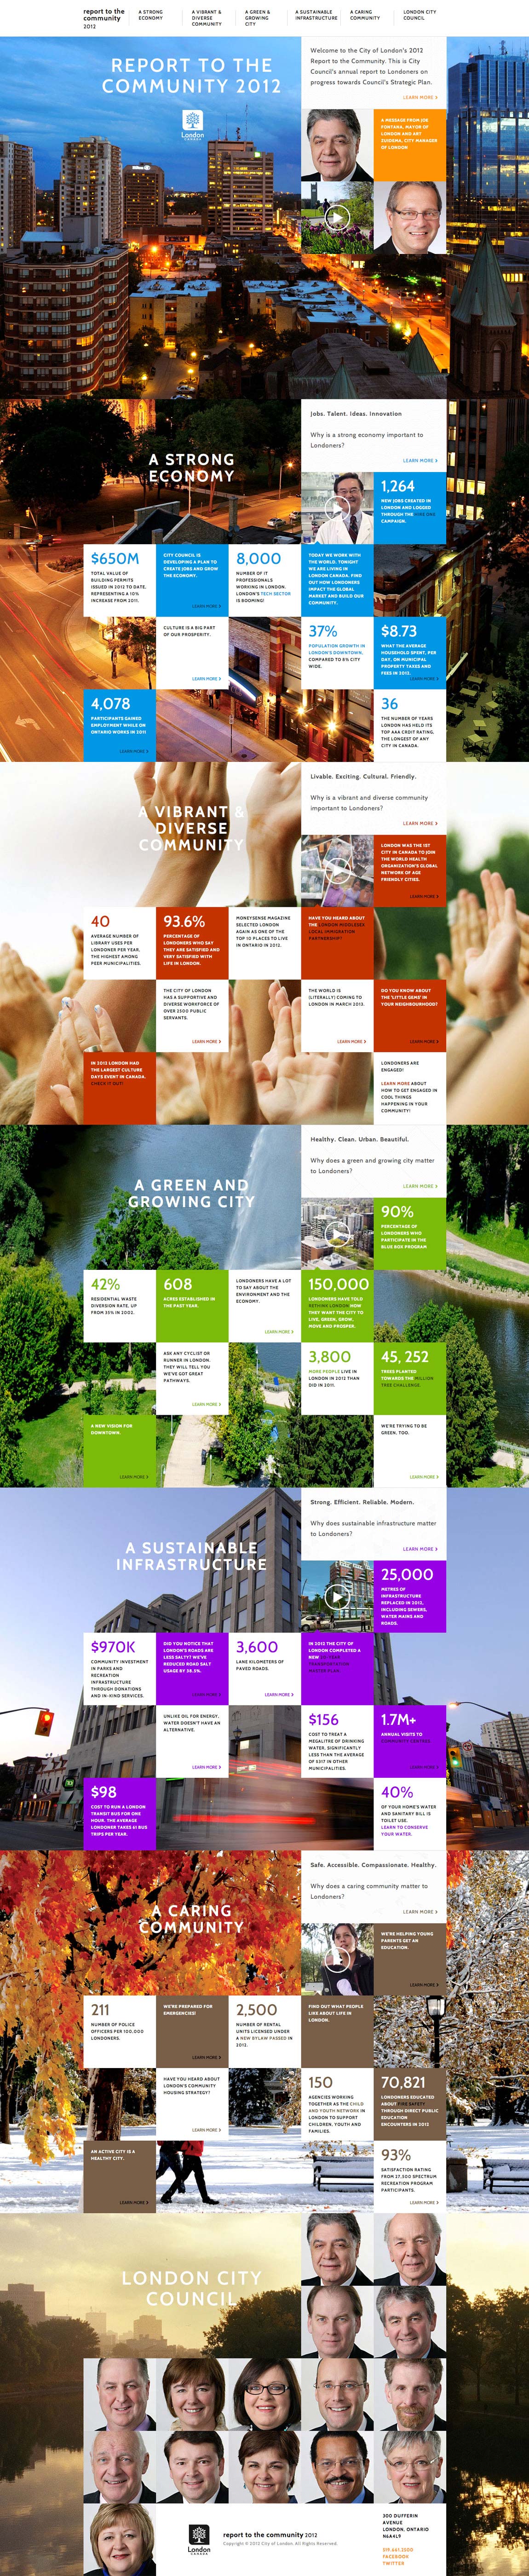 City of London – Community Report 2012 Website Screenshot